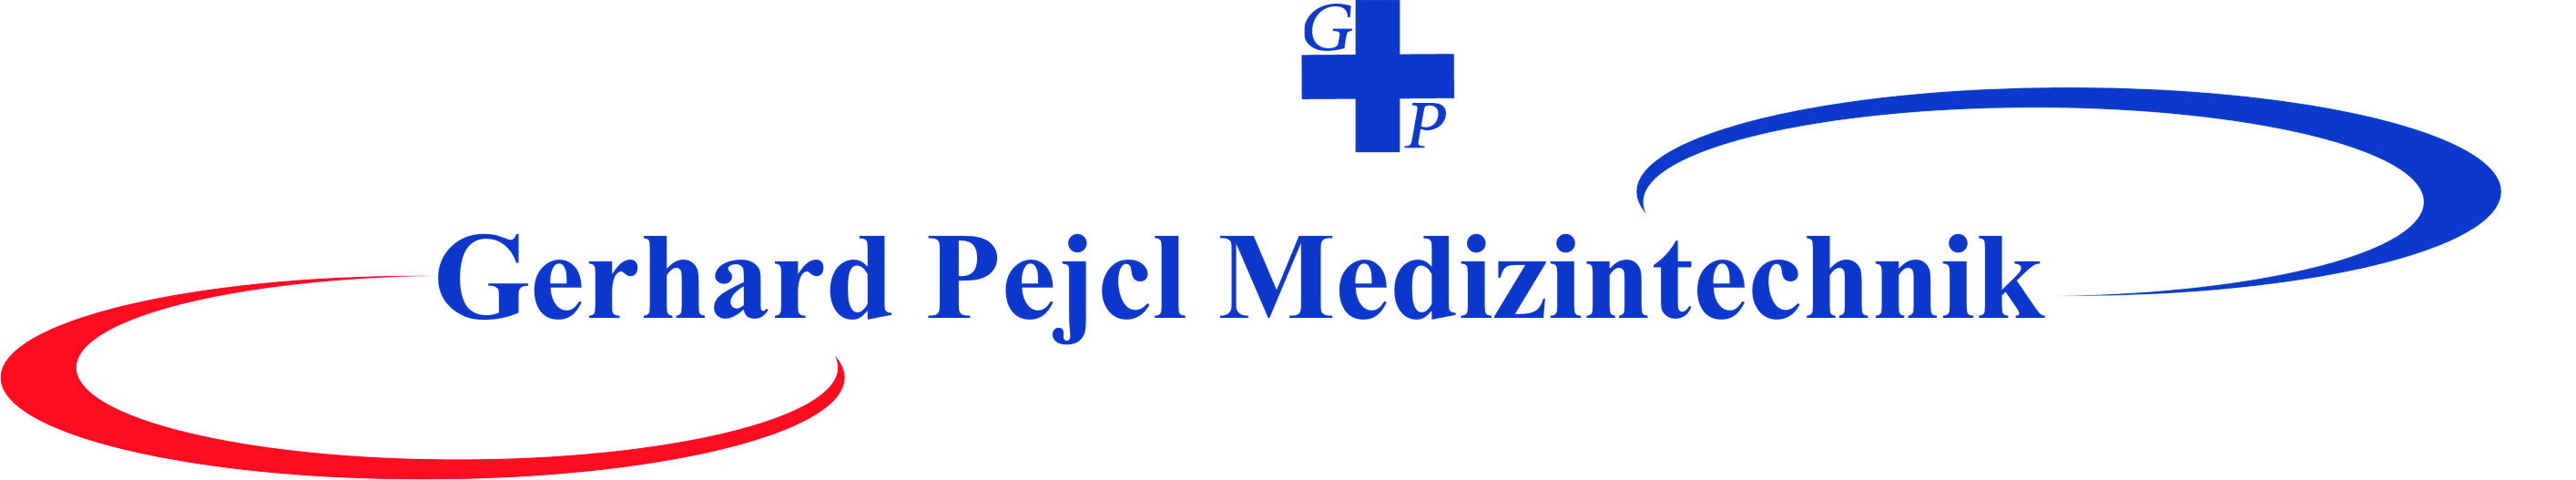 Logo Gerhard Pejcl Medizintechnik GmbH